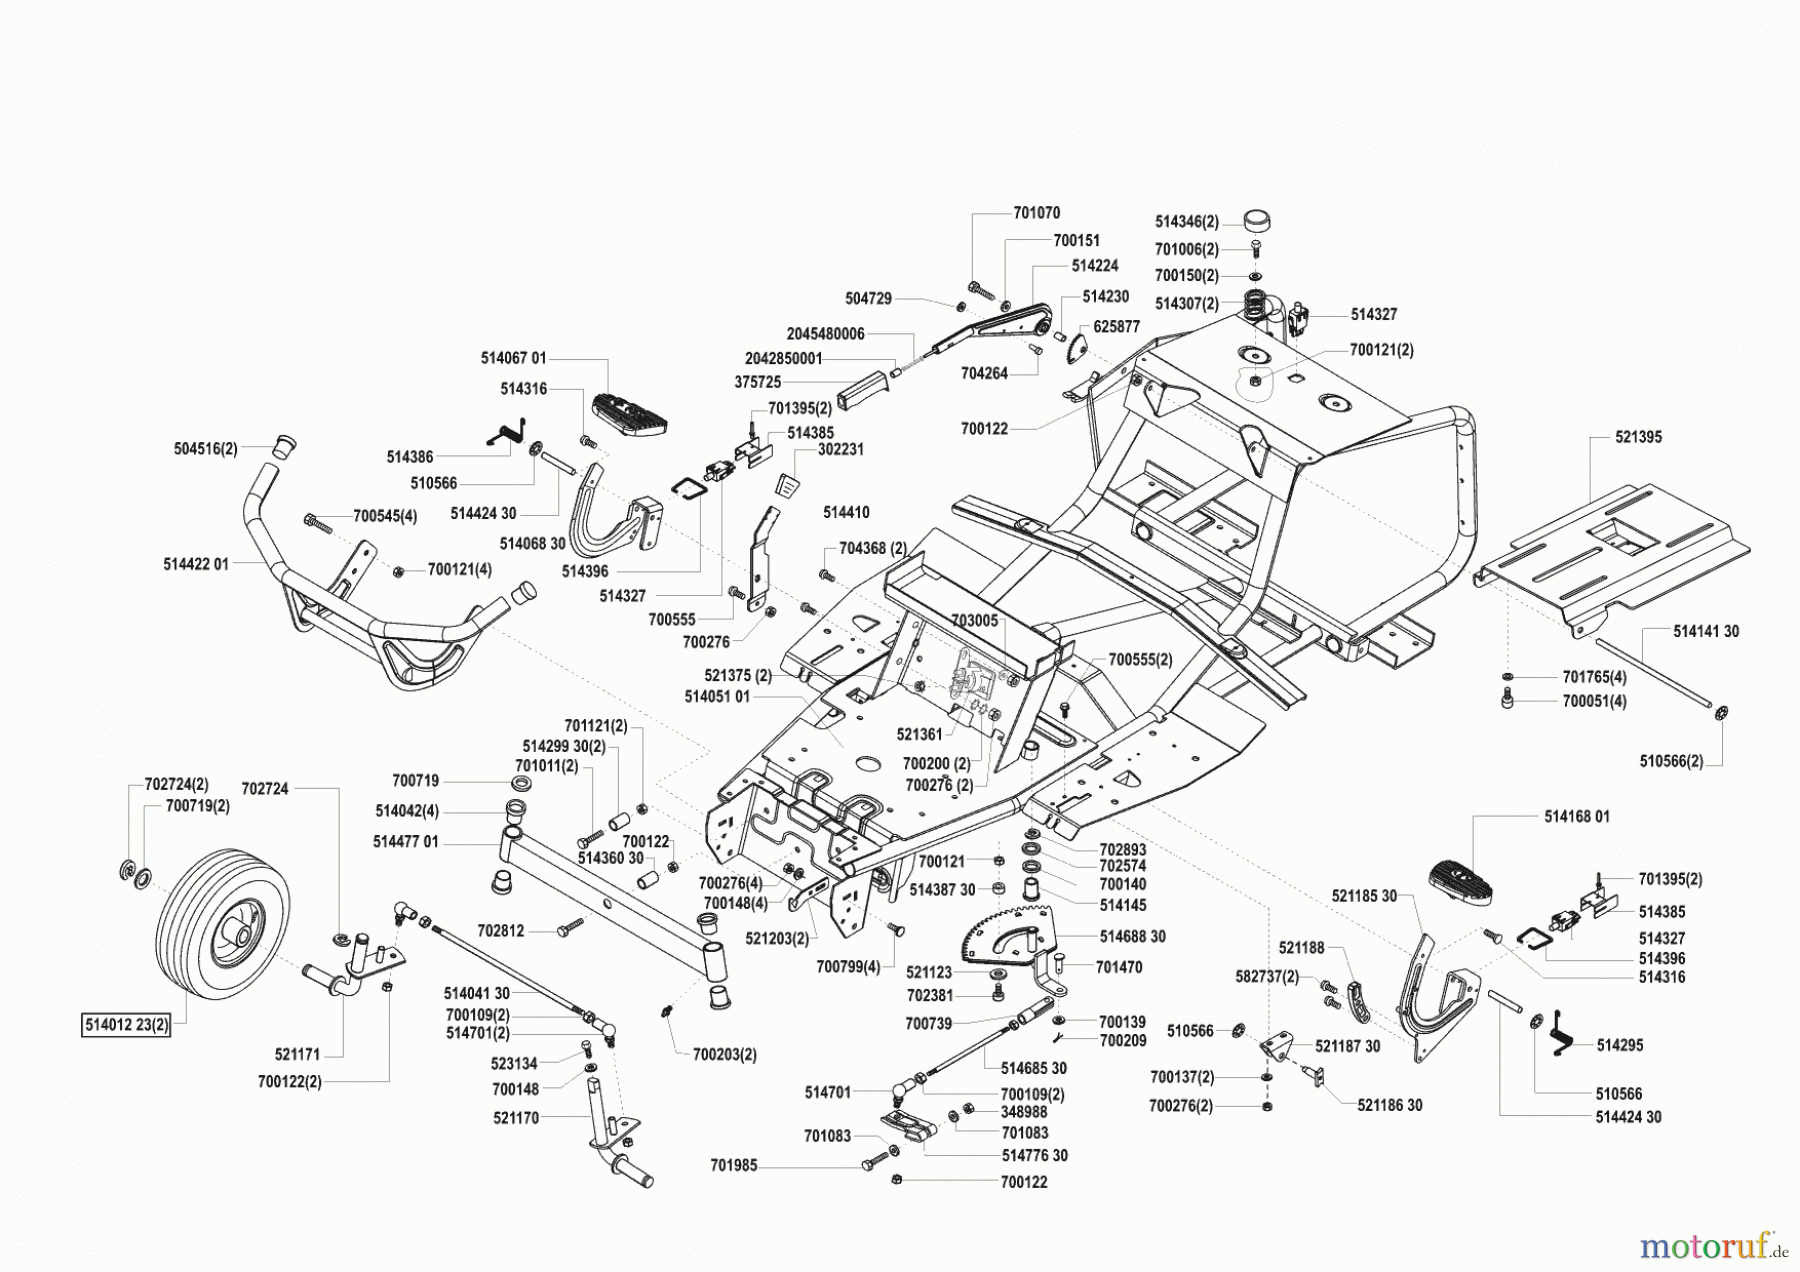  Ginge Gartentechnik Rasentraktor T 800 vor 02/2001 Seite 2